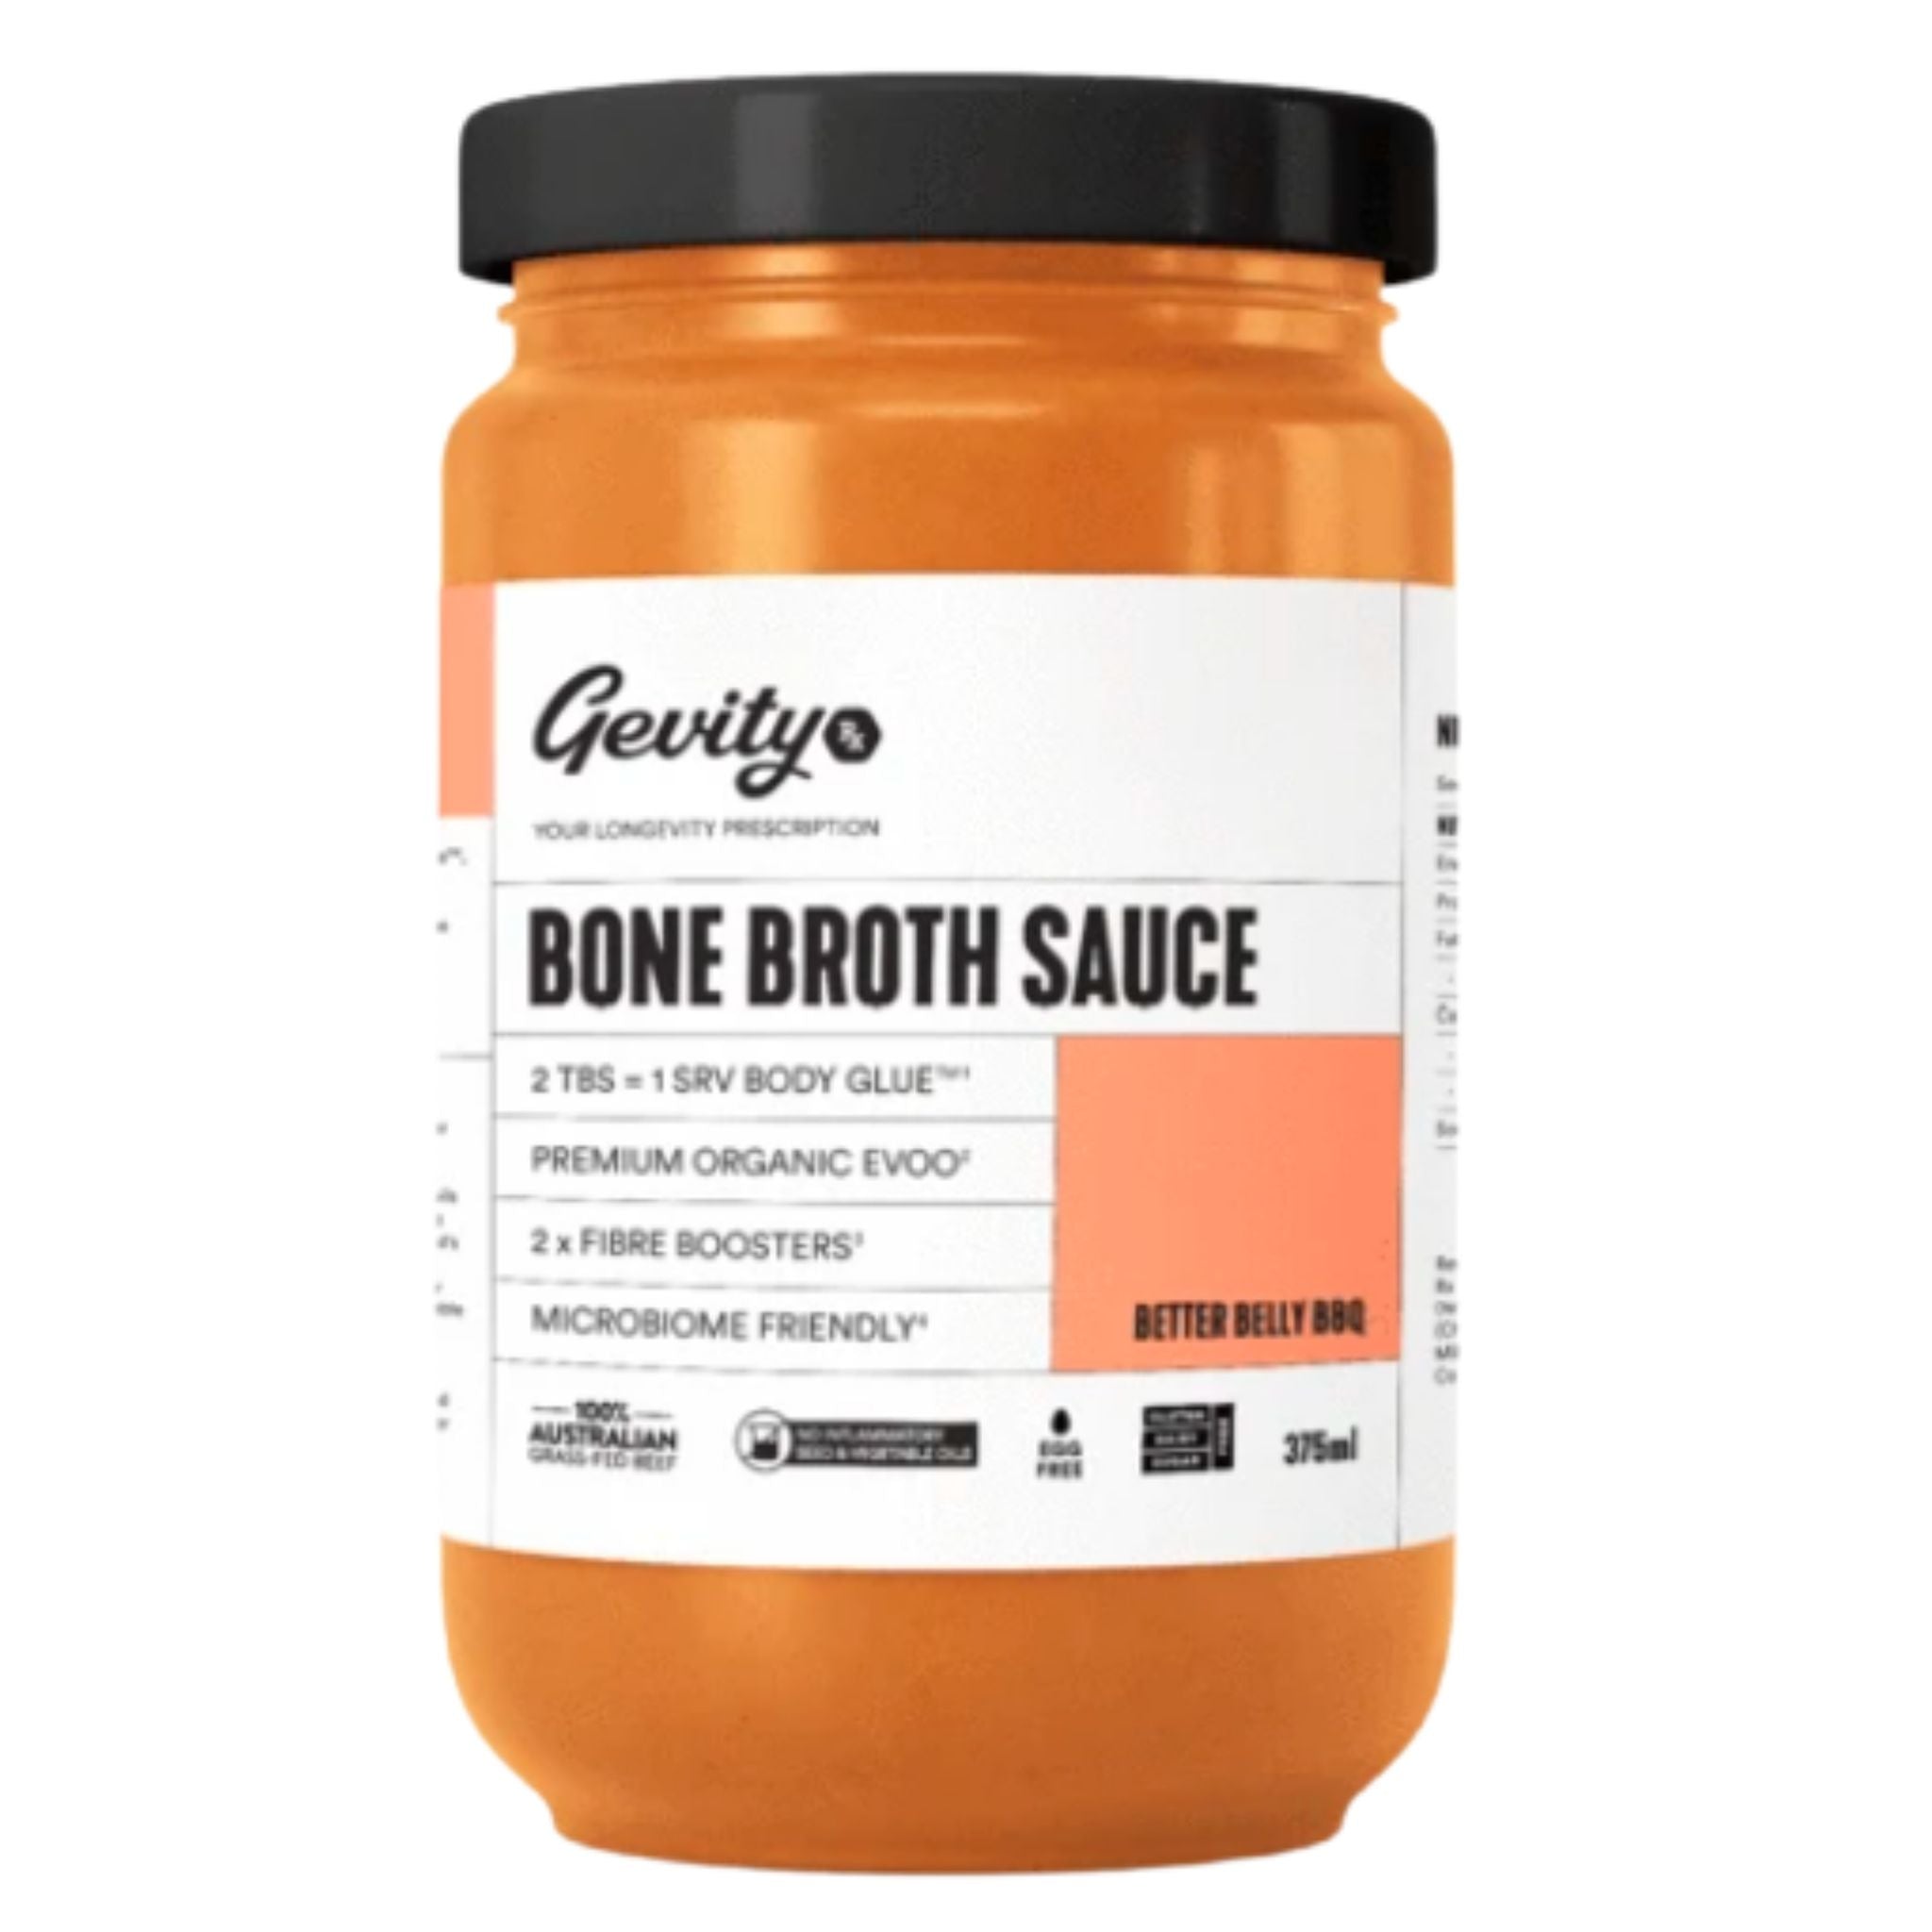 Bone Broth Sauce (Better Belly BBQ) - Gevity. 375ml